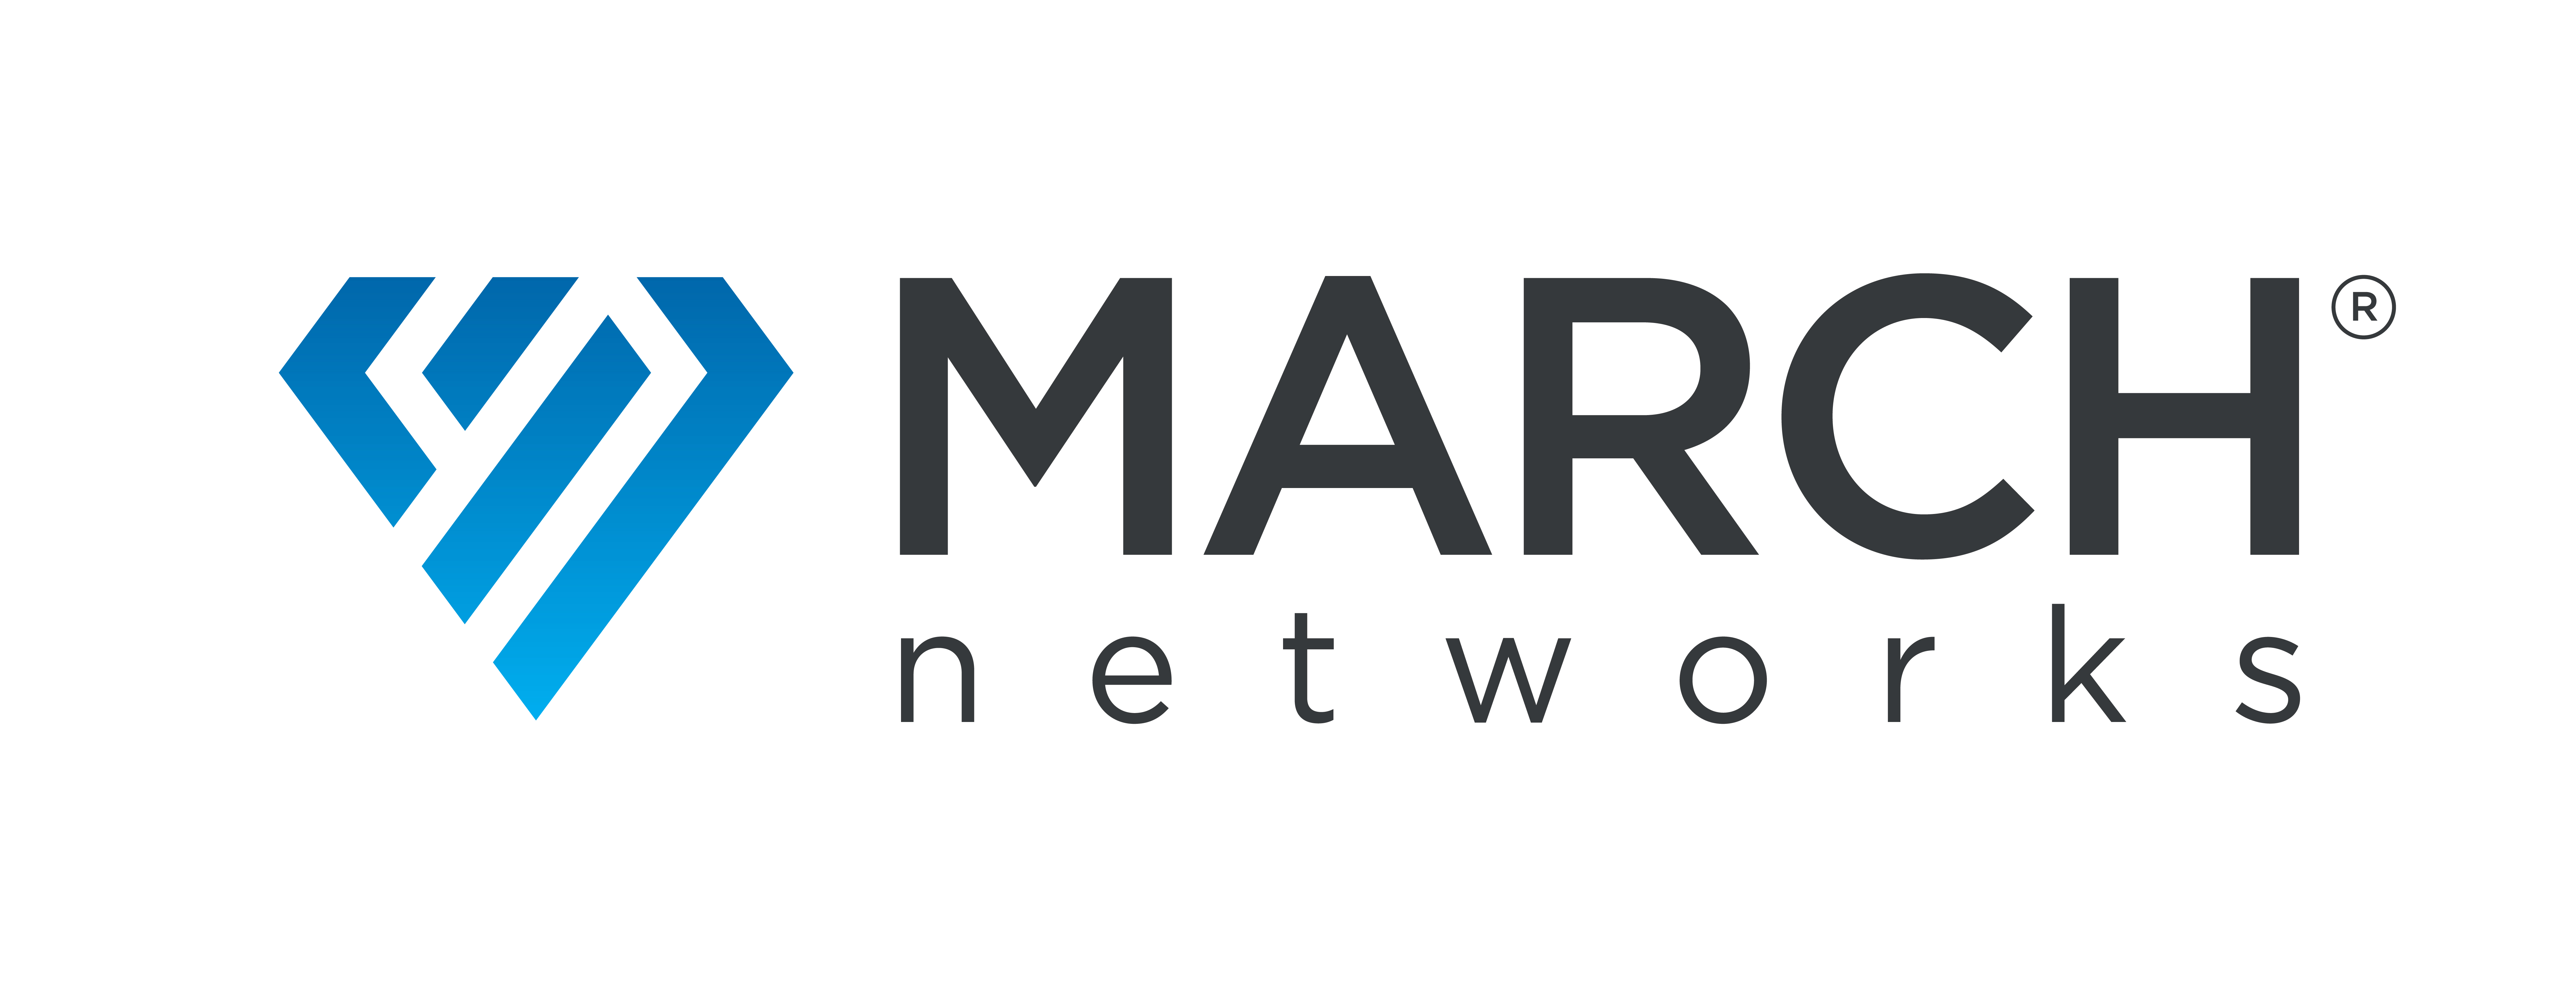 March logo refinements_R_V2